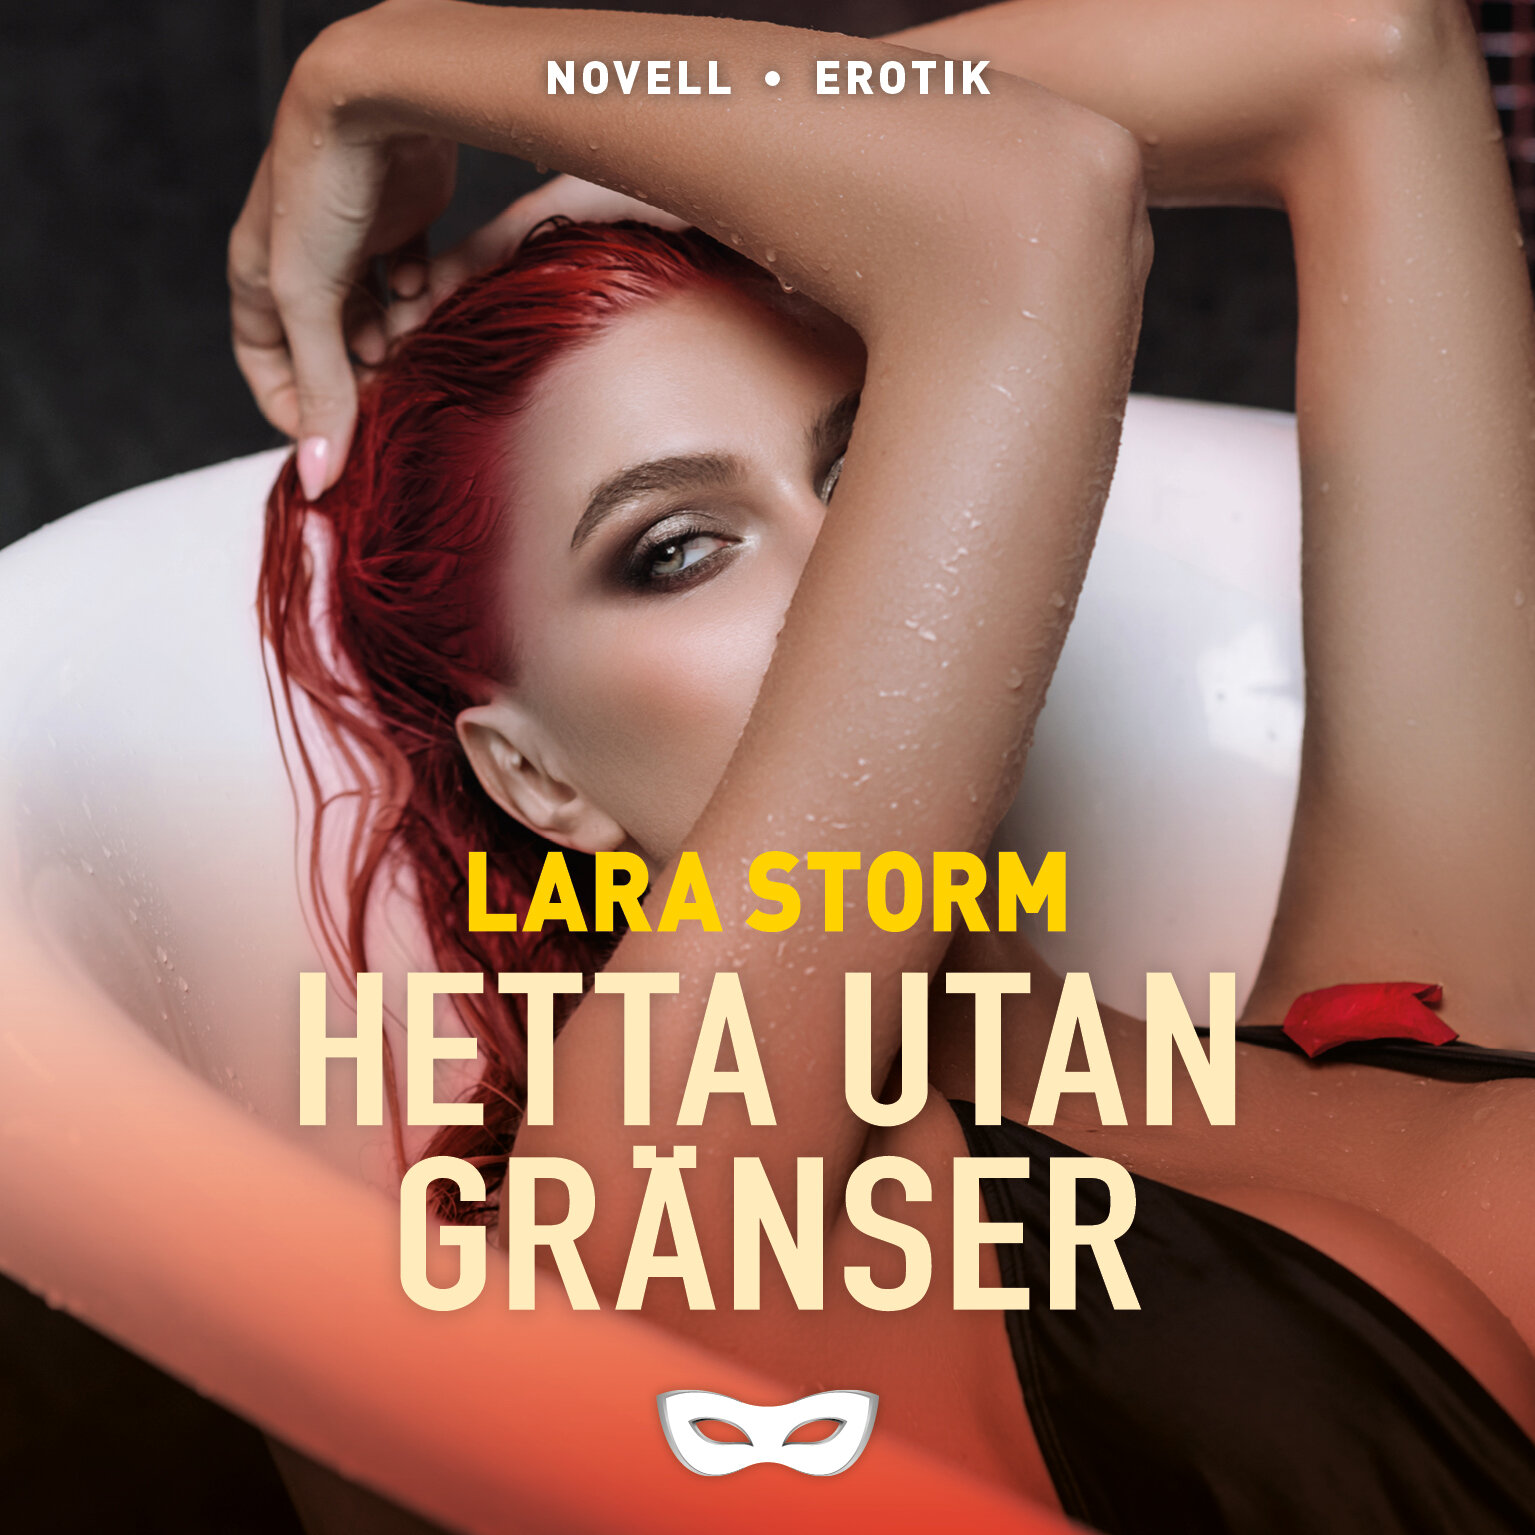 MIO Hetta utan gränser Lara Storm omslag audio.jpg